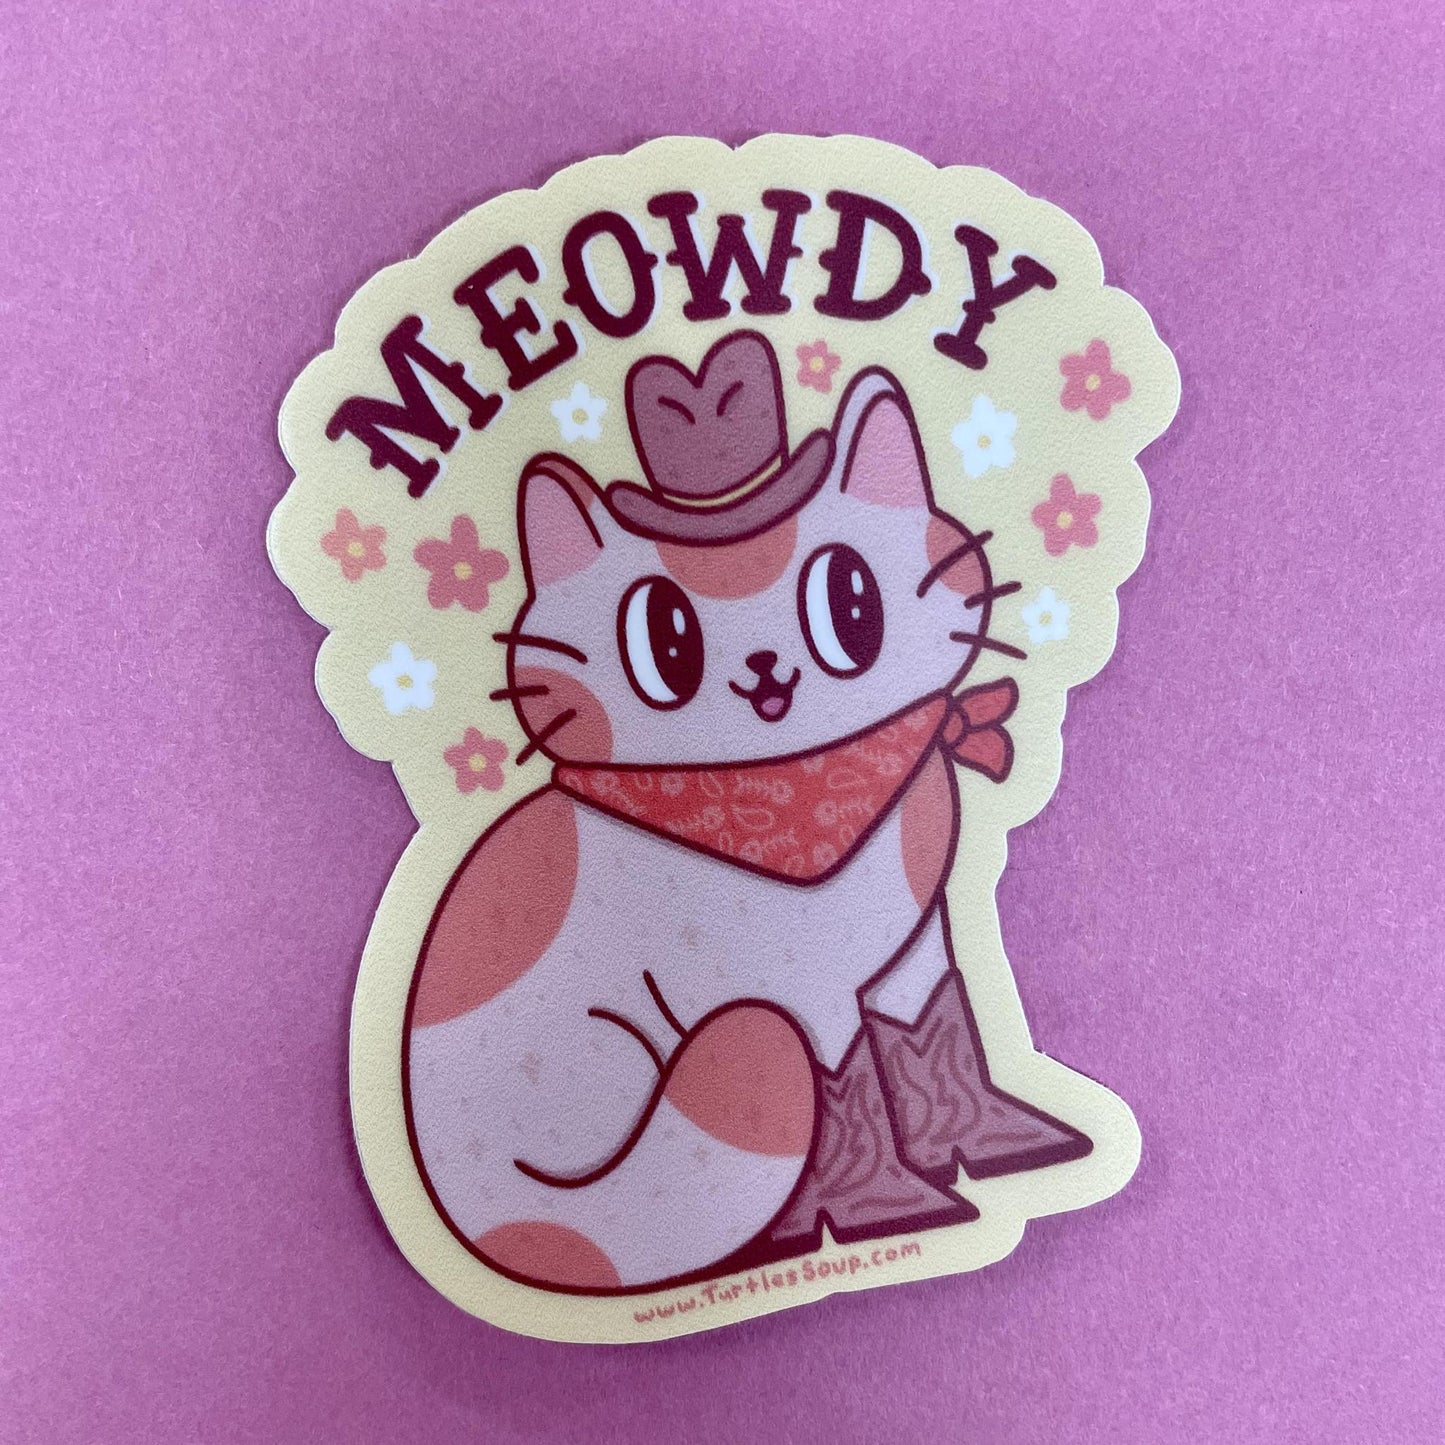 Meowdy Sticker